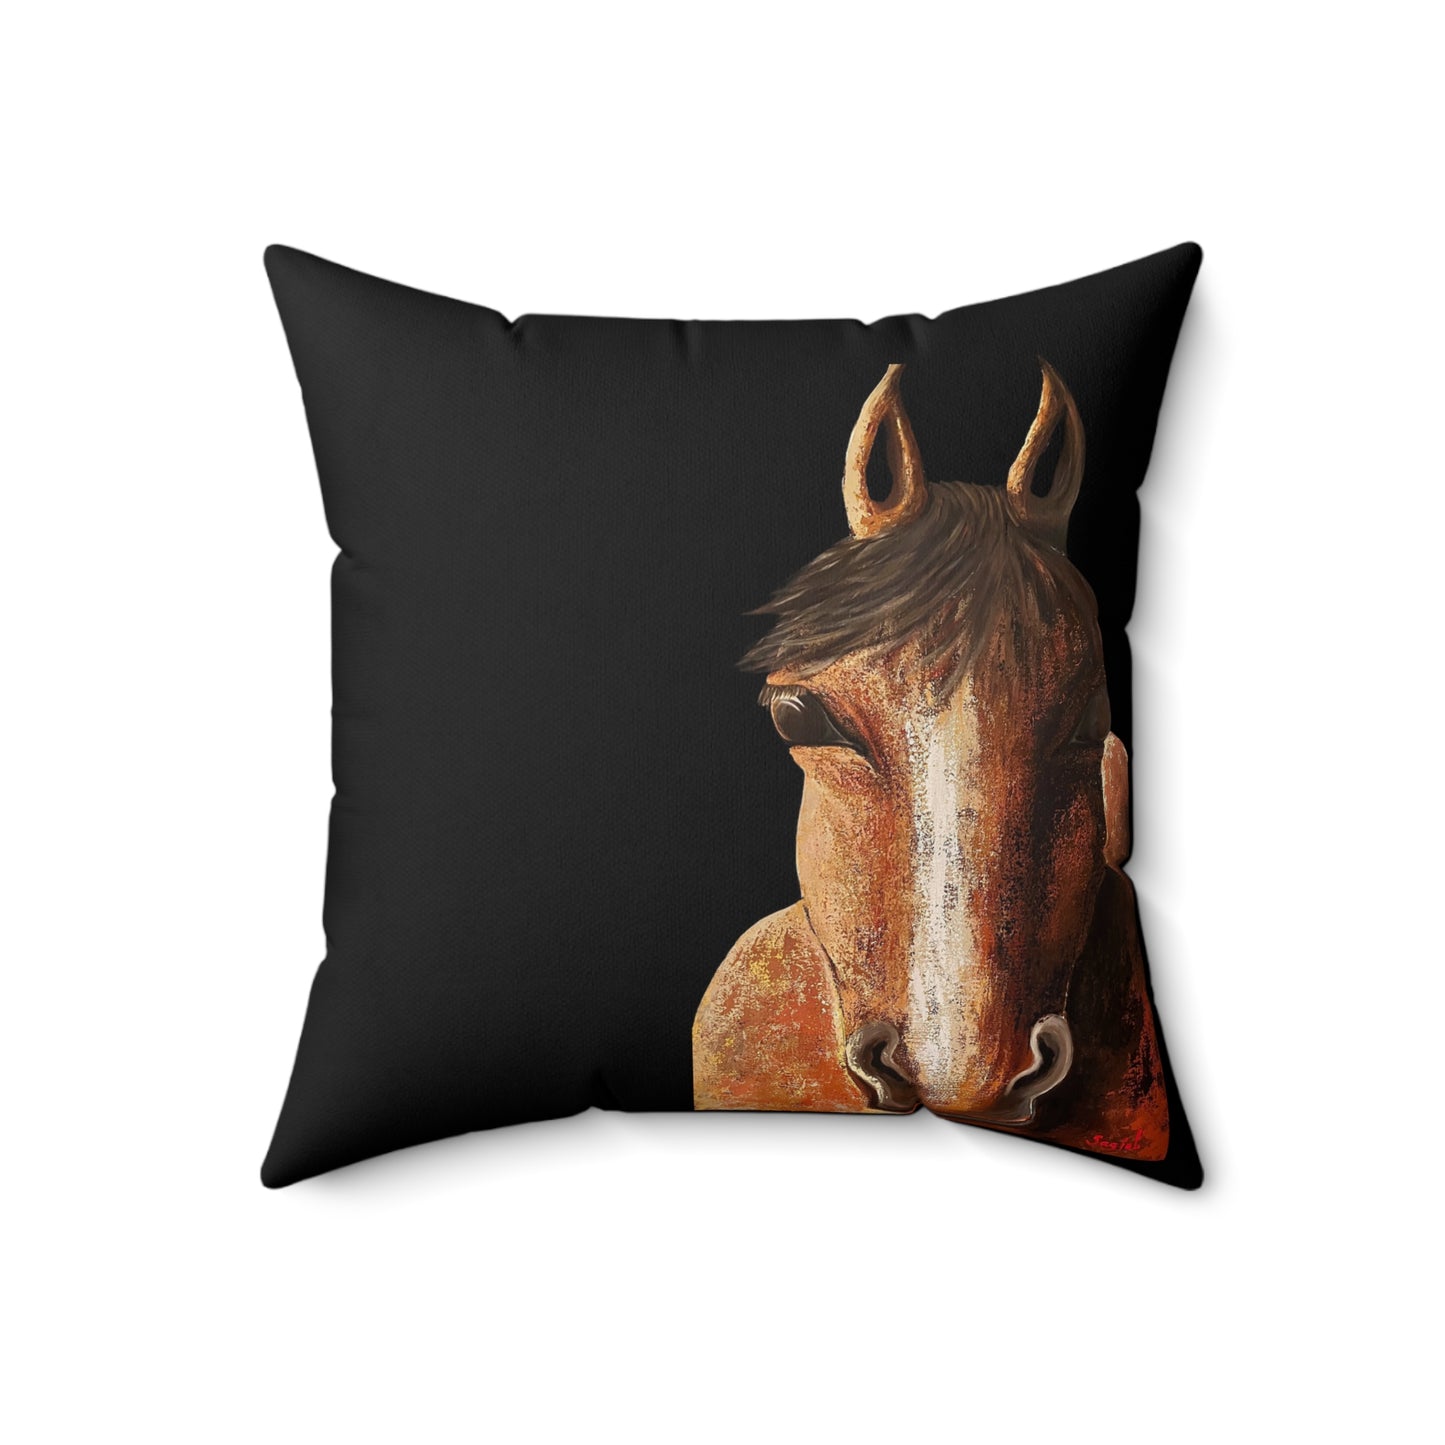 Horse Faux Suede Pillow - Equestrian Decor - Black Throw Pillow - Western Decor - Nigel Hand painted art Pillow